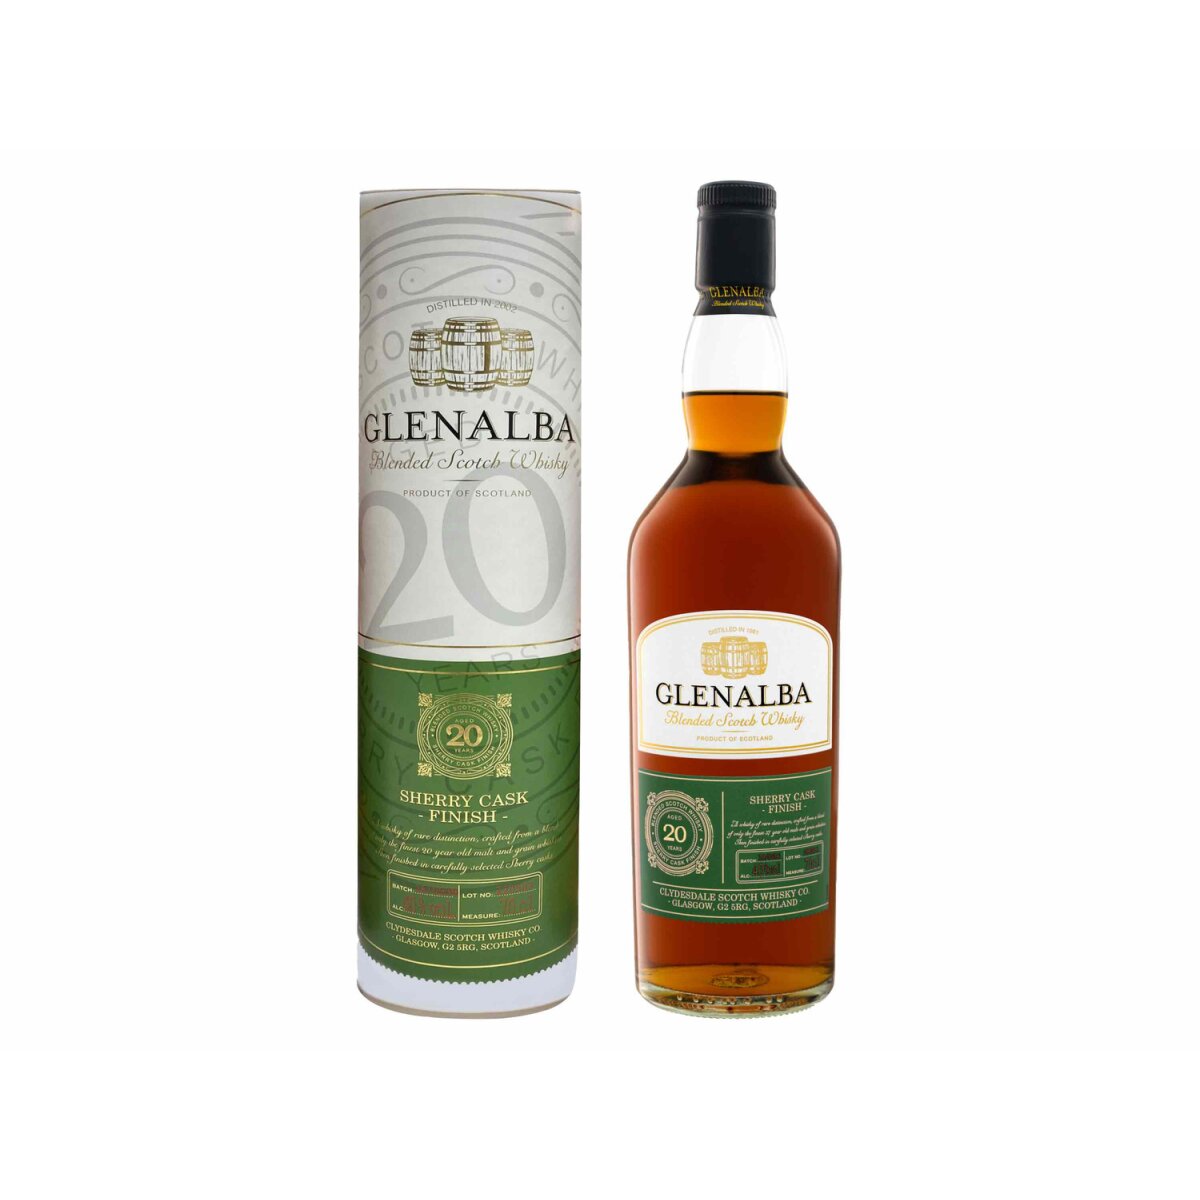 Glenalba Blended Scotch Whisky Sherry Cask Finish 20 Jahre mit Geschenkbox  40% Vol, 32,99 €